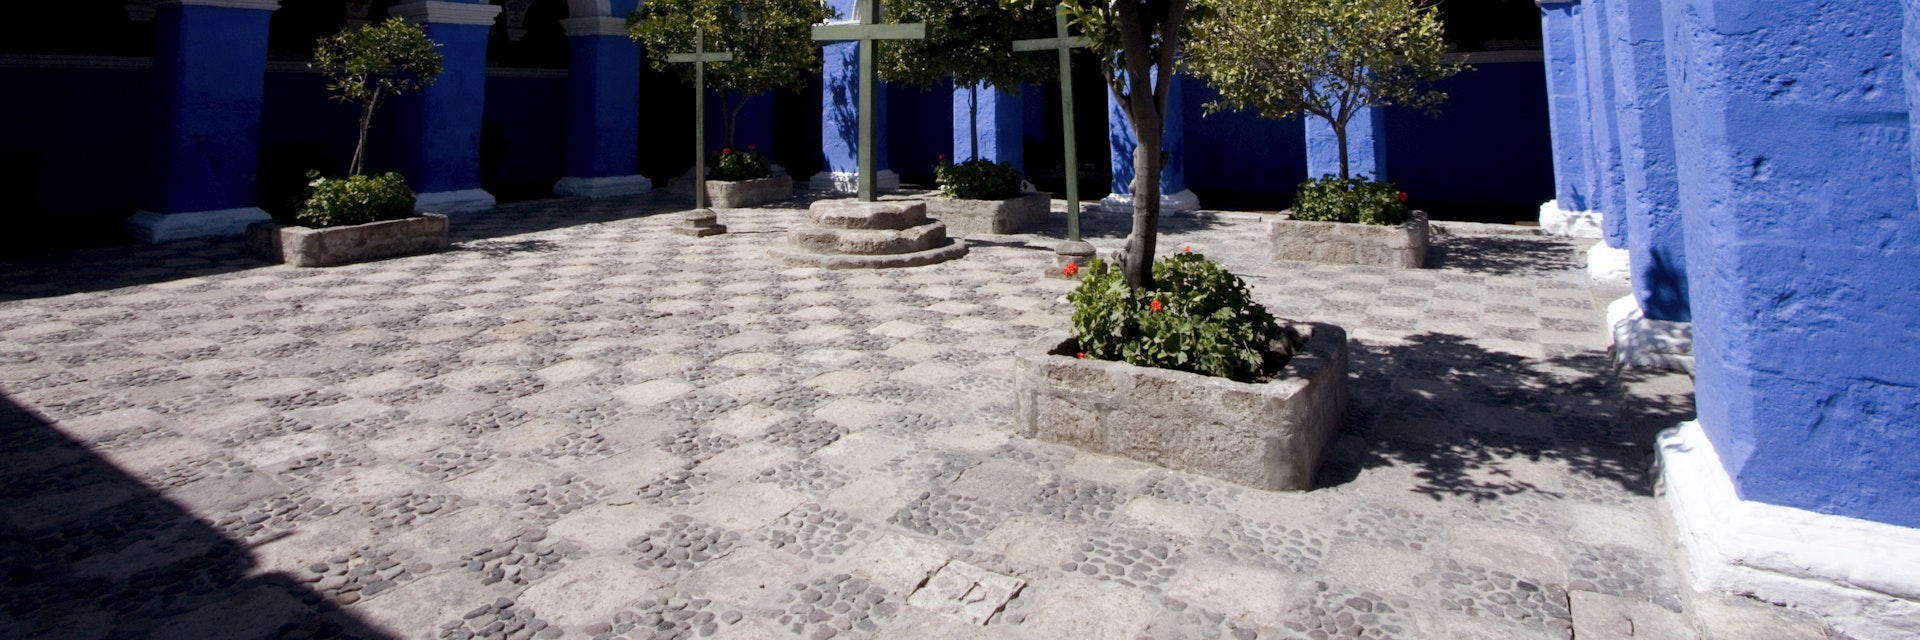 Crosses in courtyard of Cloister of Orange Trees in Monasterio de Santa Catalina (Santa Catalina Monastery), Arequipa, Peru